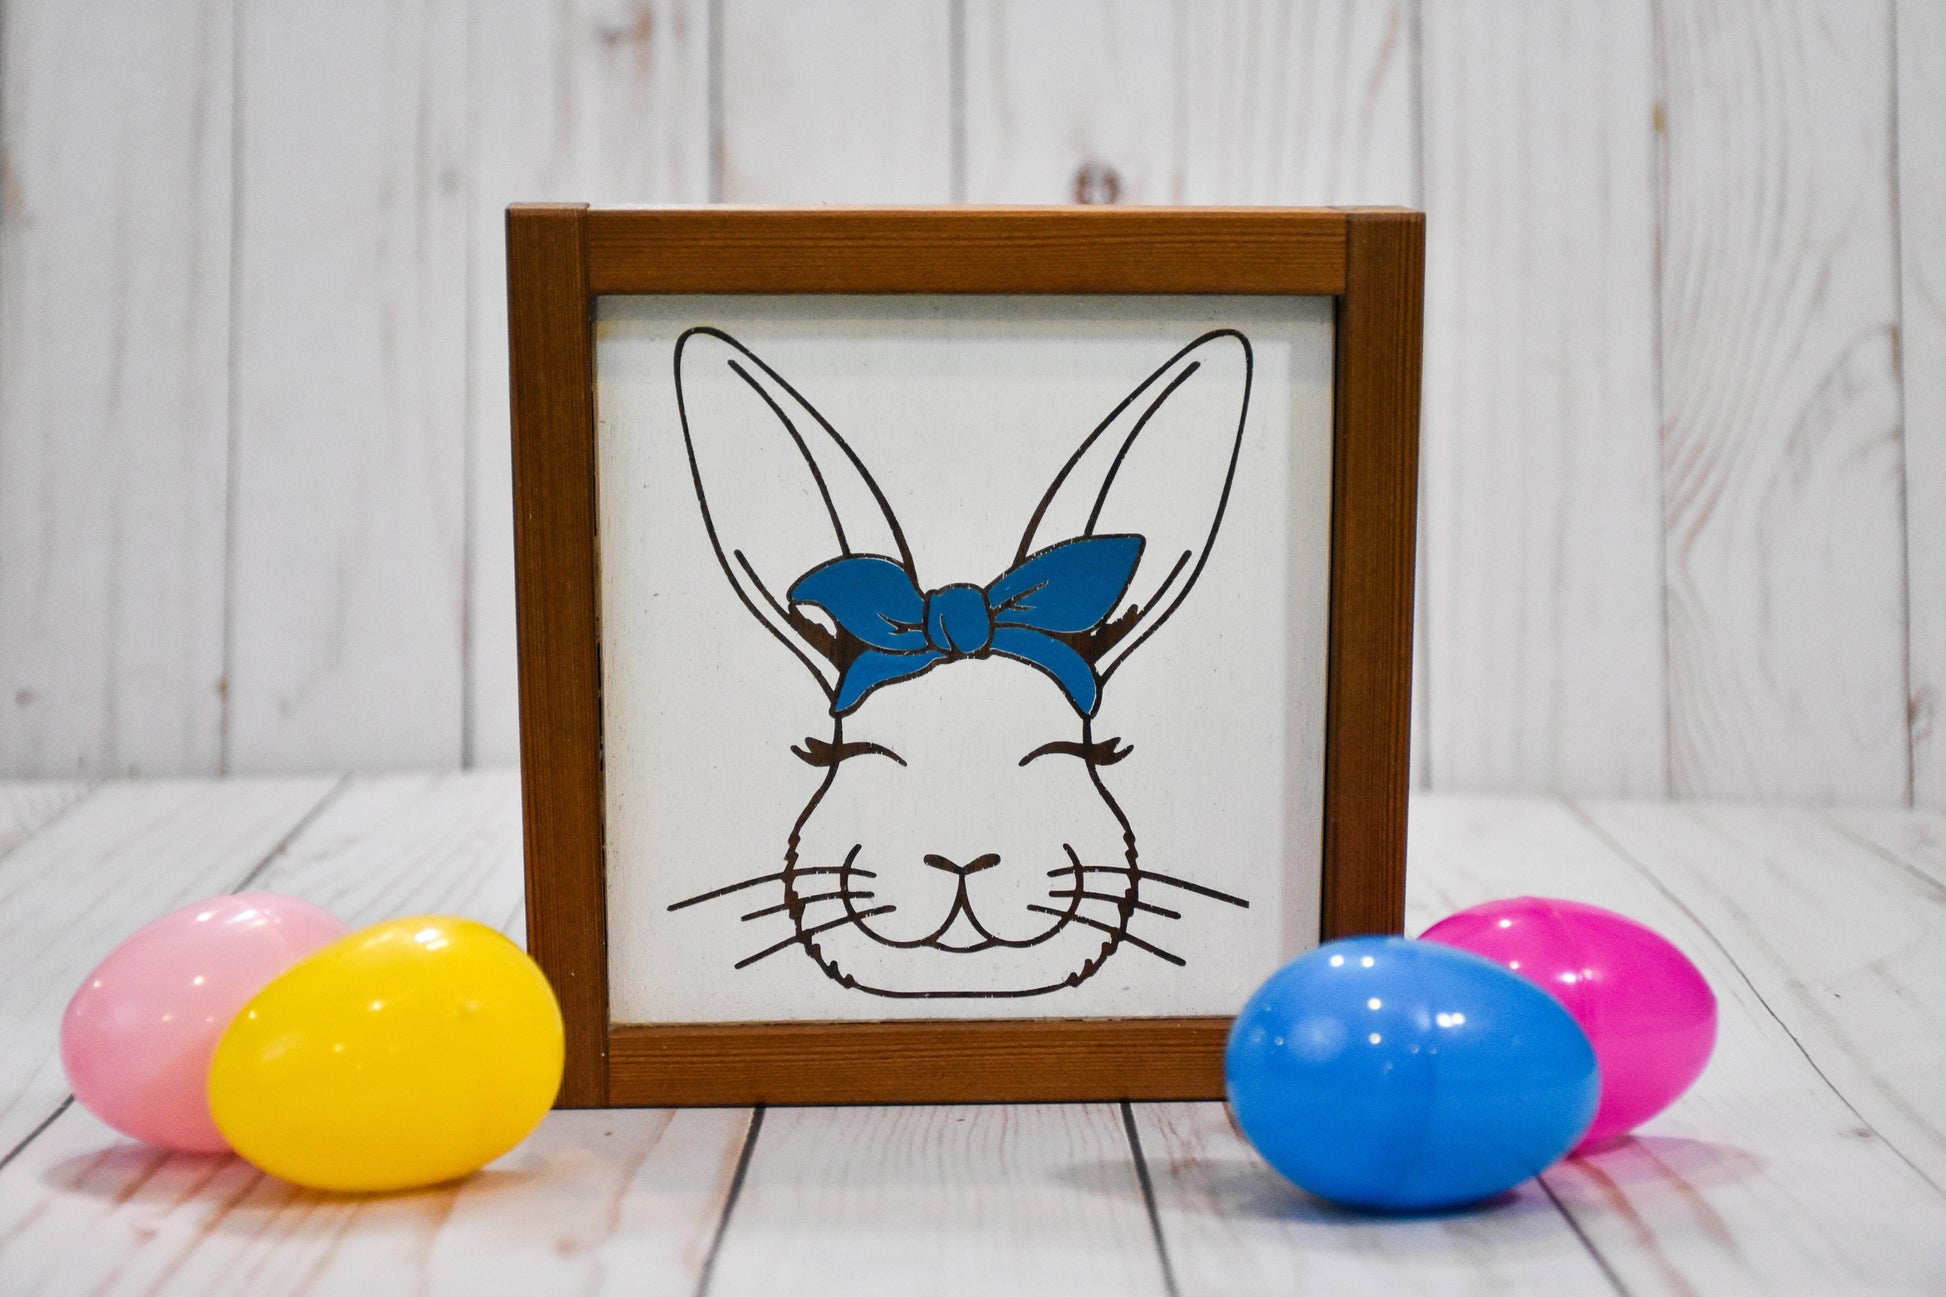 Rabbit Blue Bow 5x5 Shelf Sitter Signs- Share Your Hobbies, Great for Gifting! Sassafras Originals